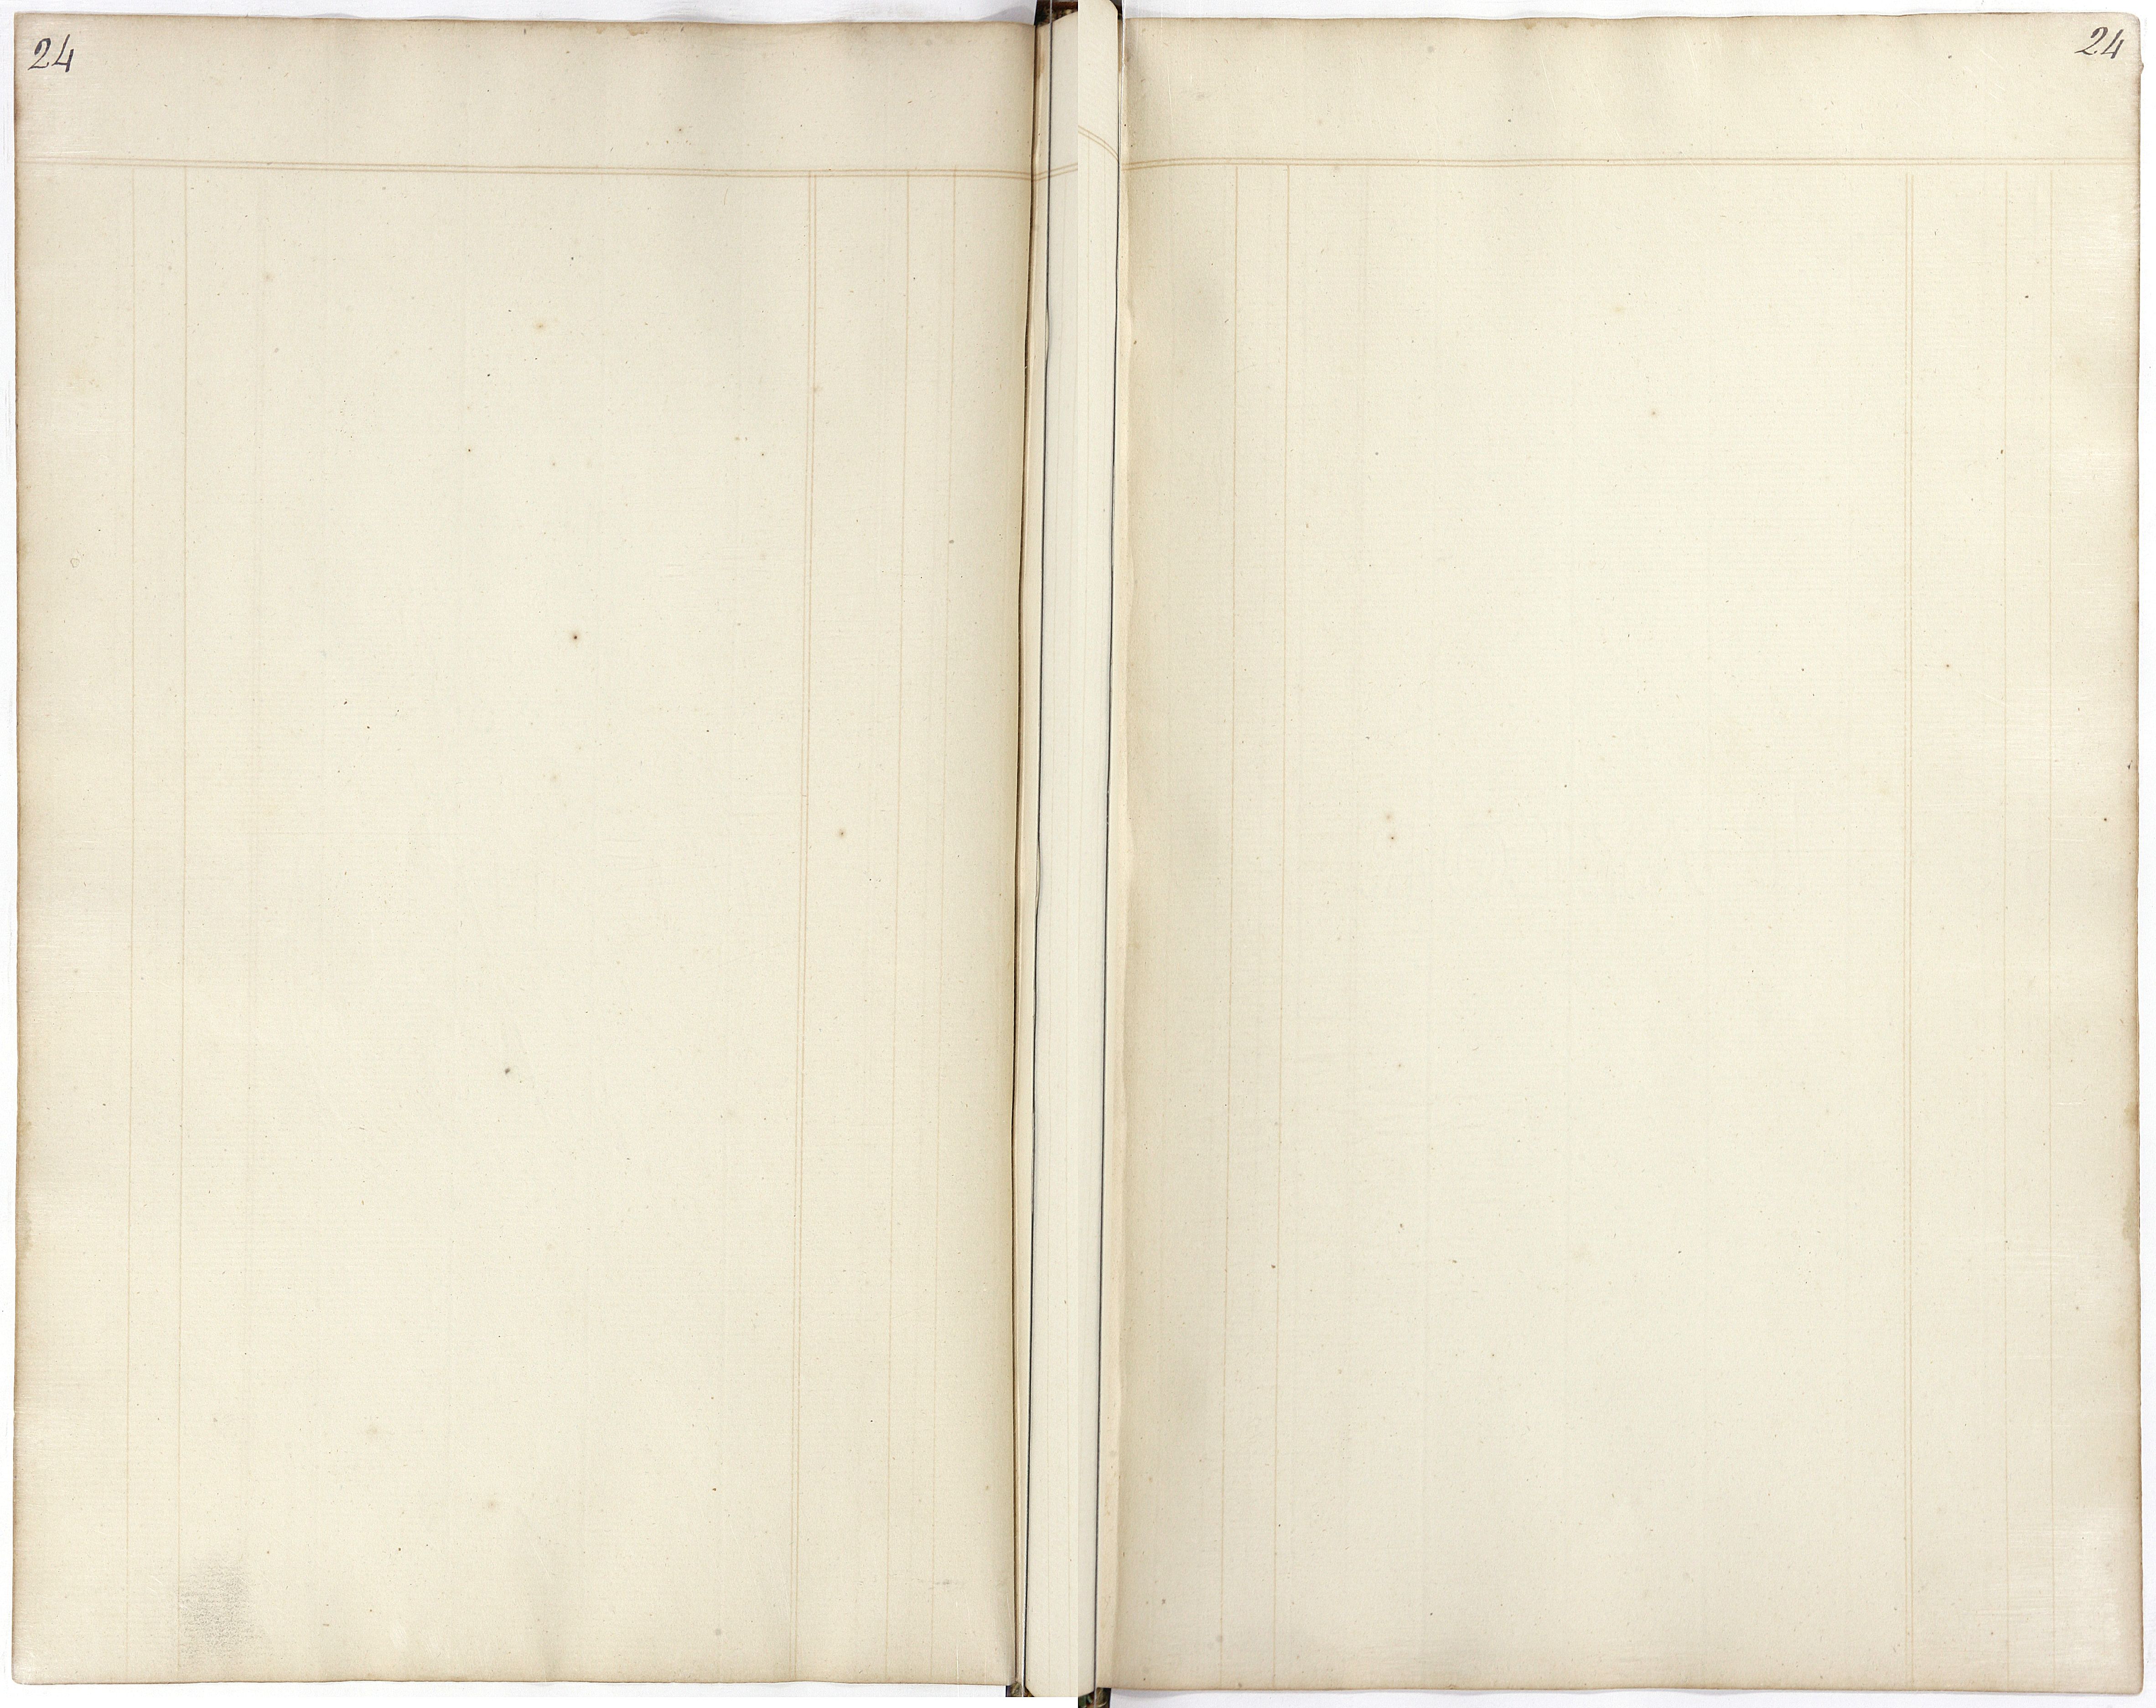 Image of Folio 24 (transcription below)